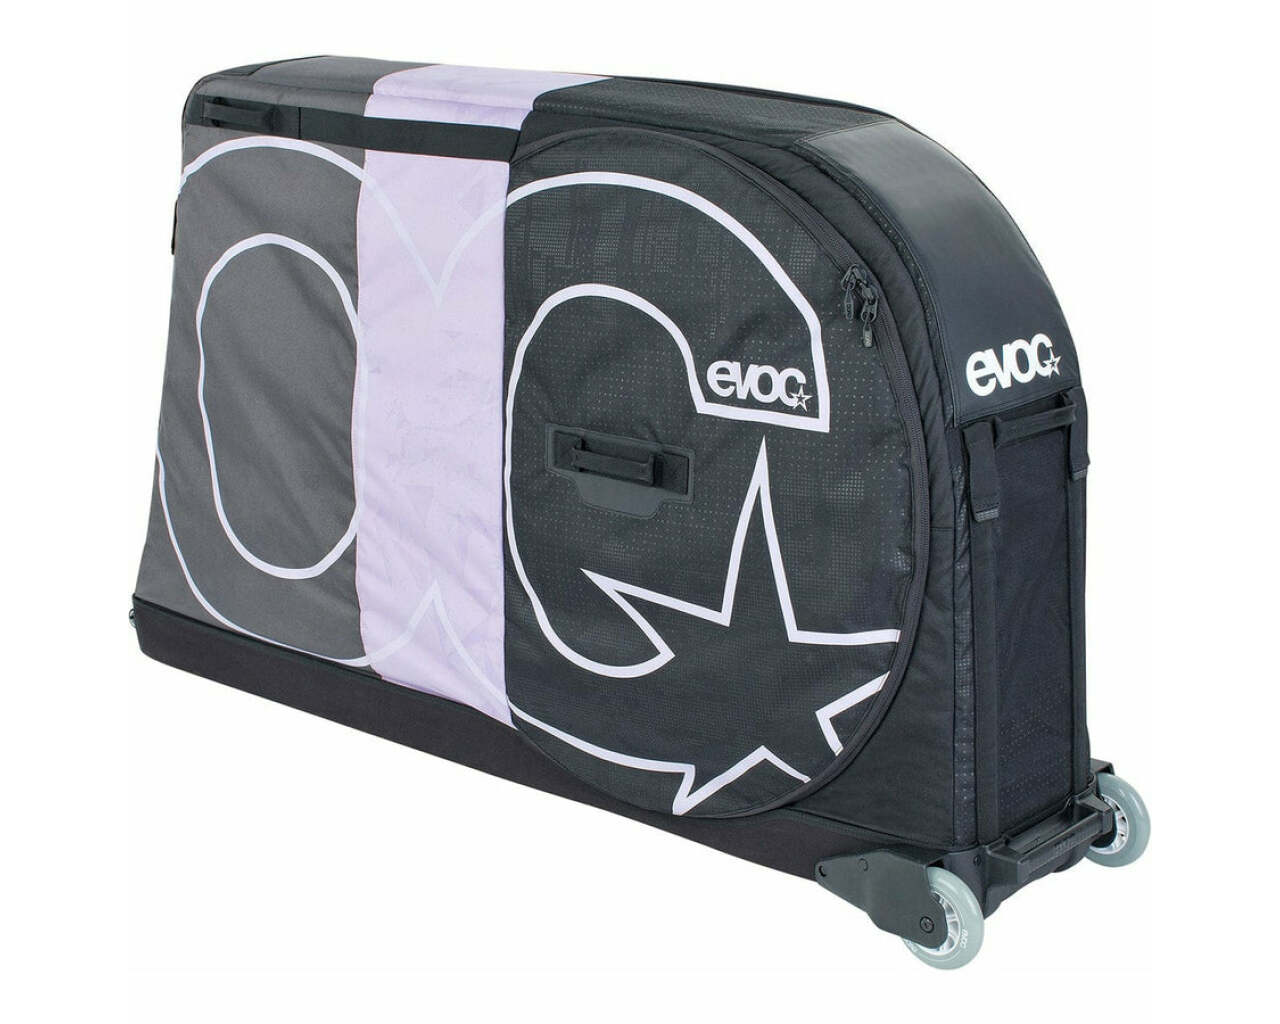 evoc travel bag pro dimensions